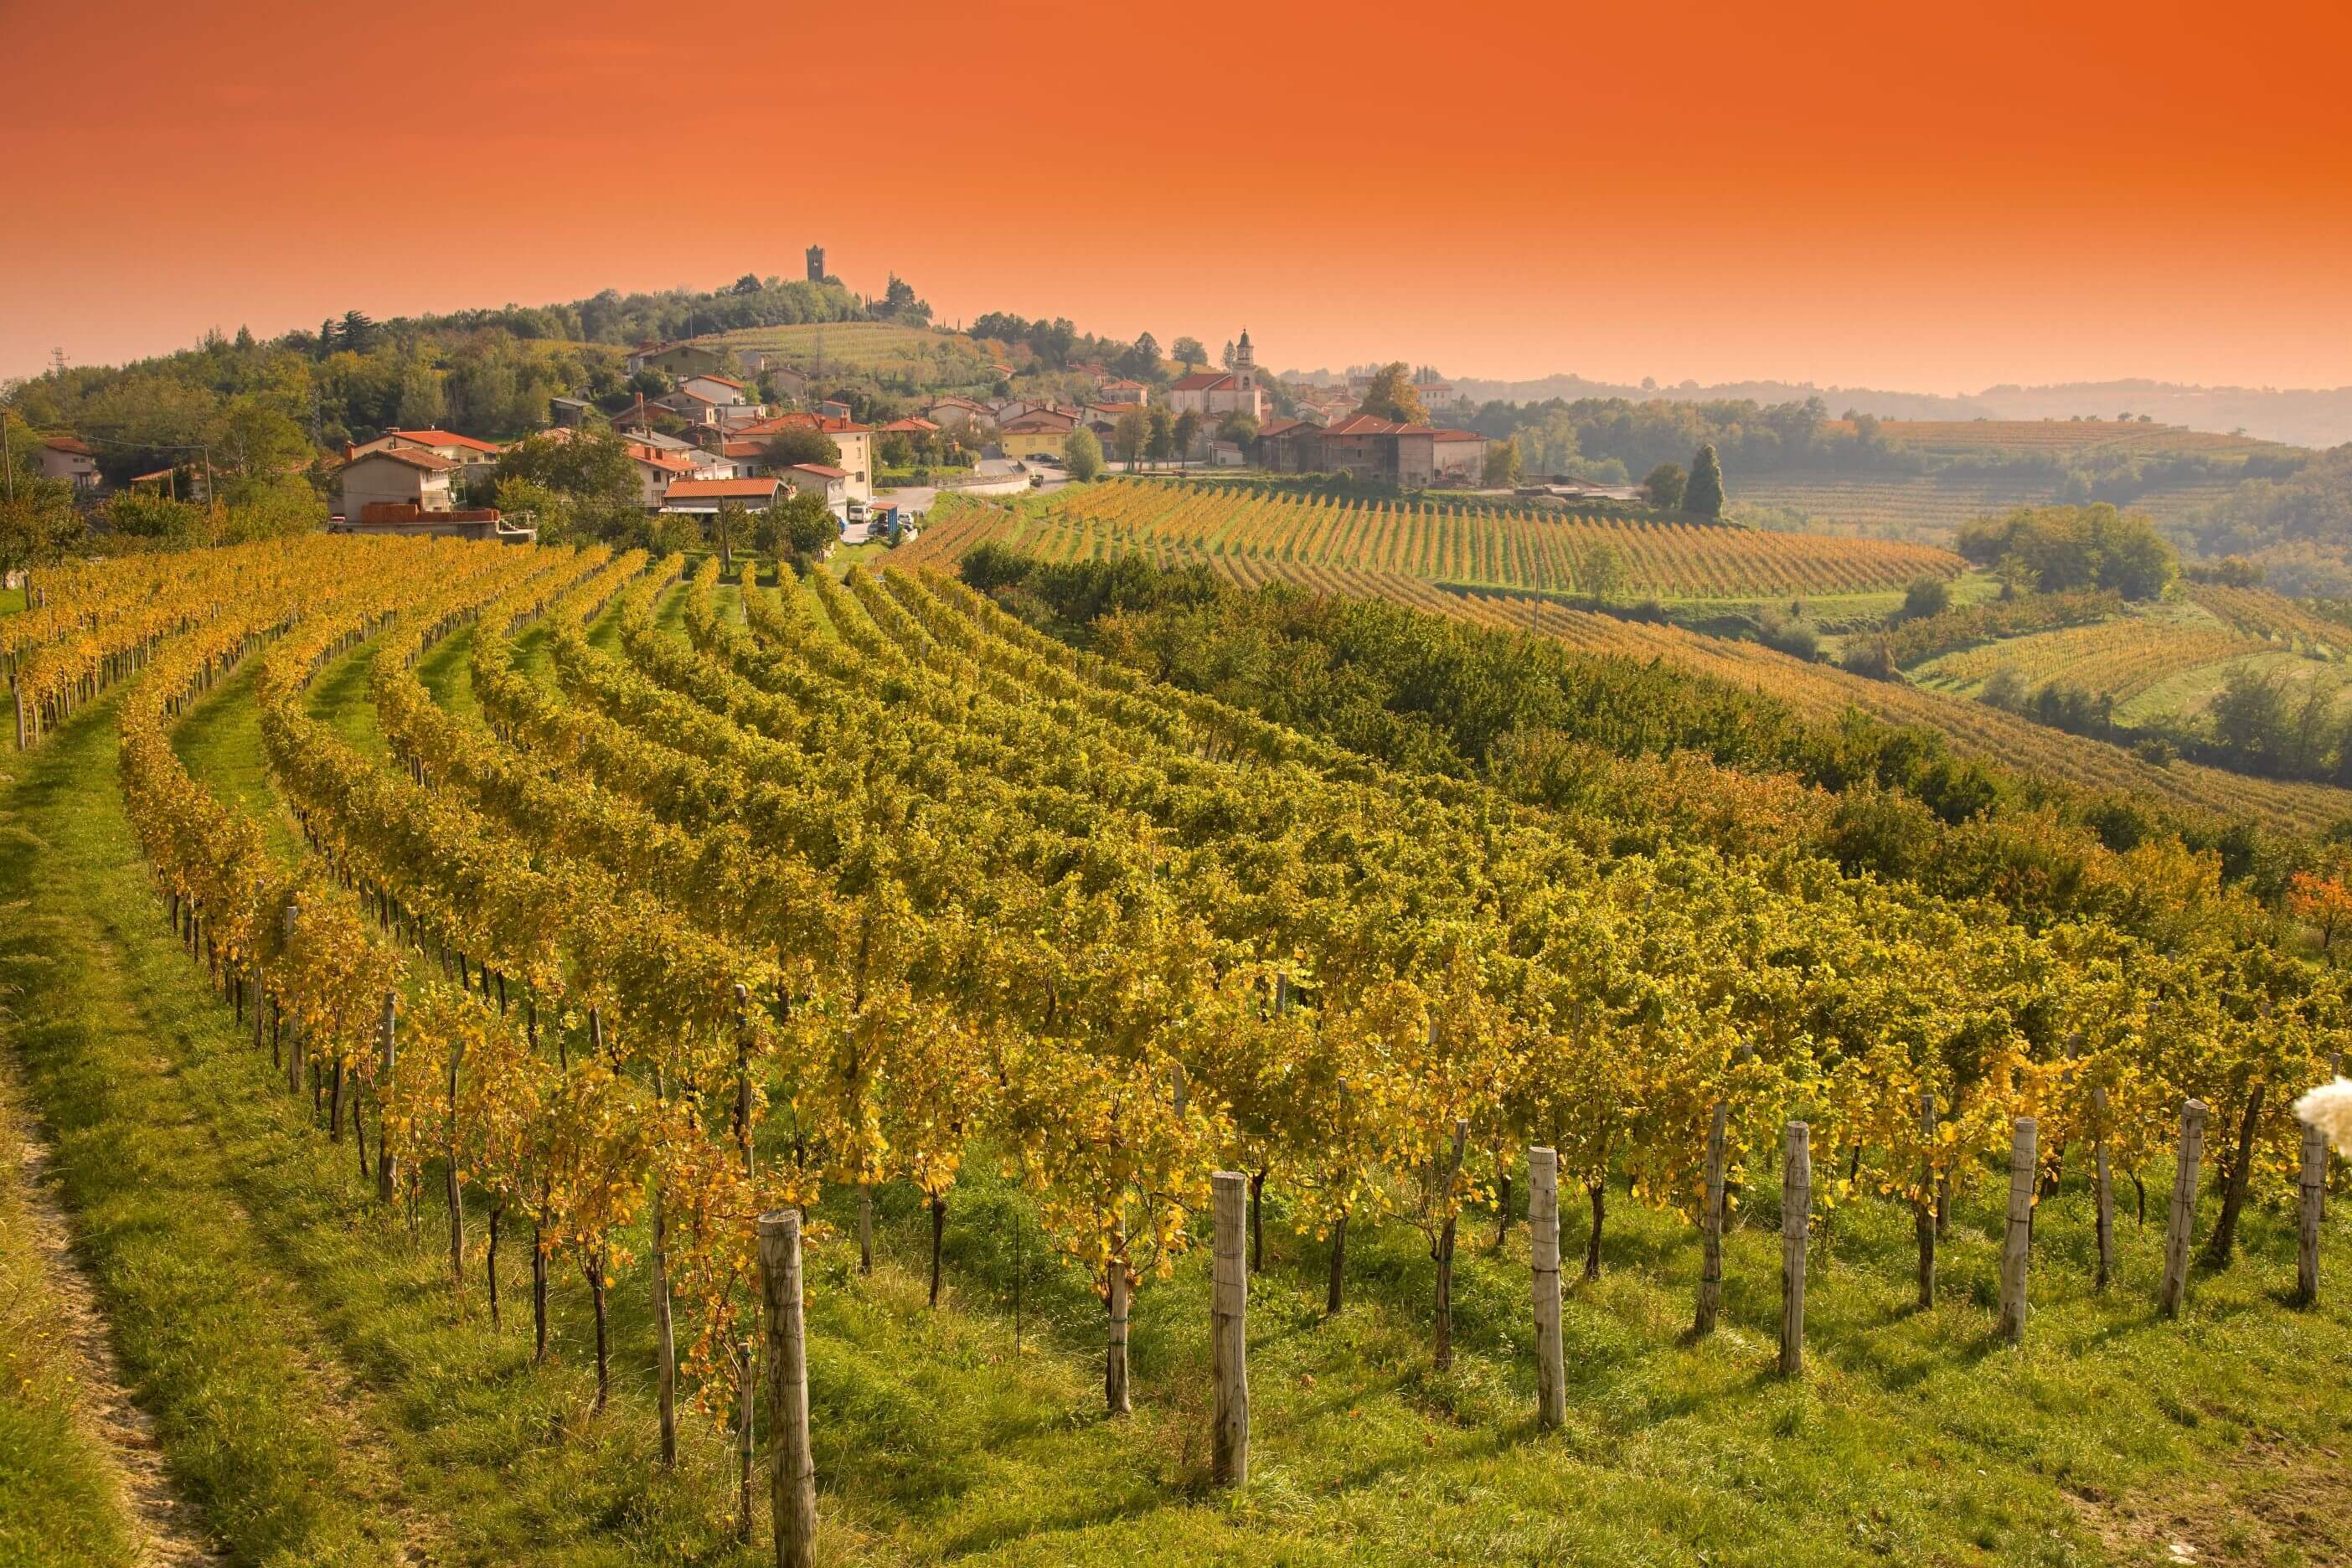 Vinag - Vinoteka in Slovenia, Europe | Wineries - Rated 0.8